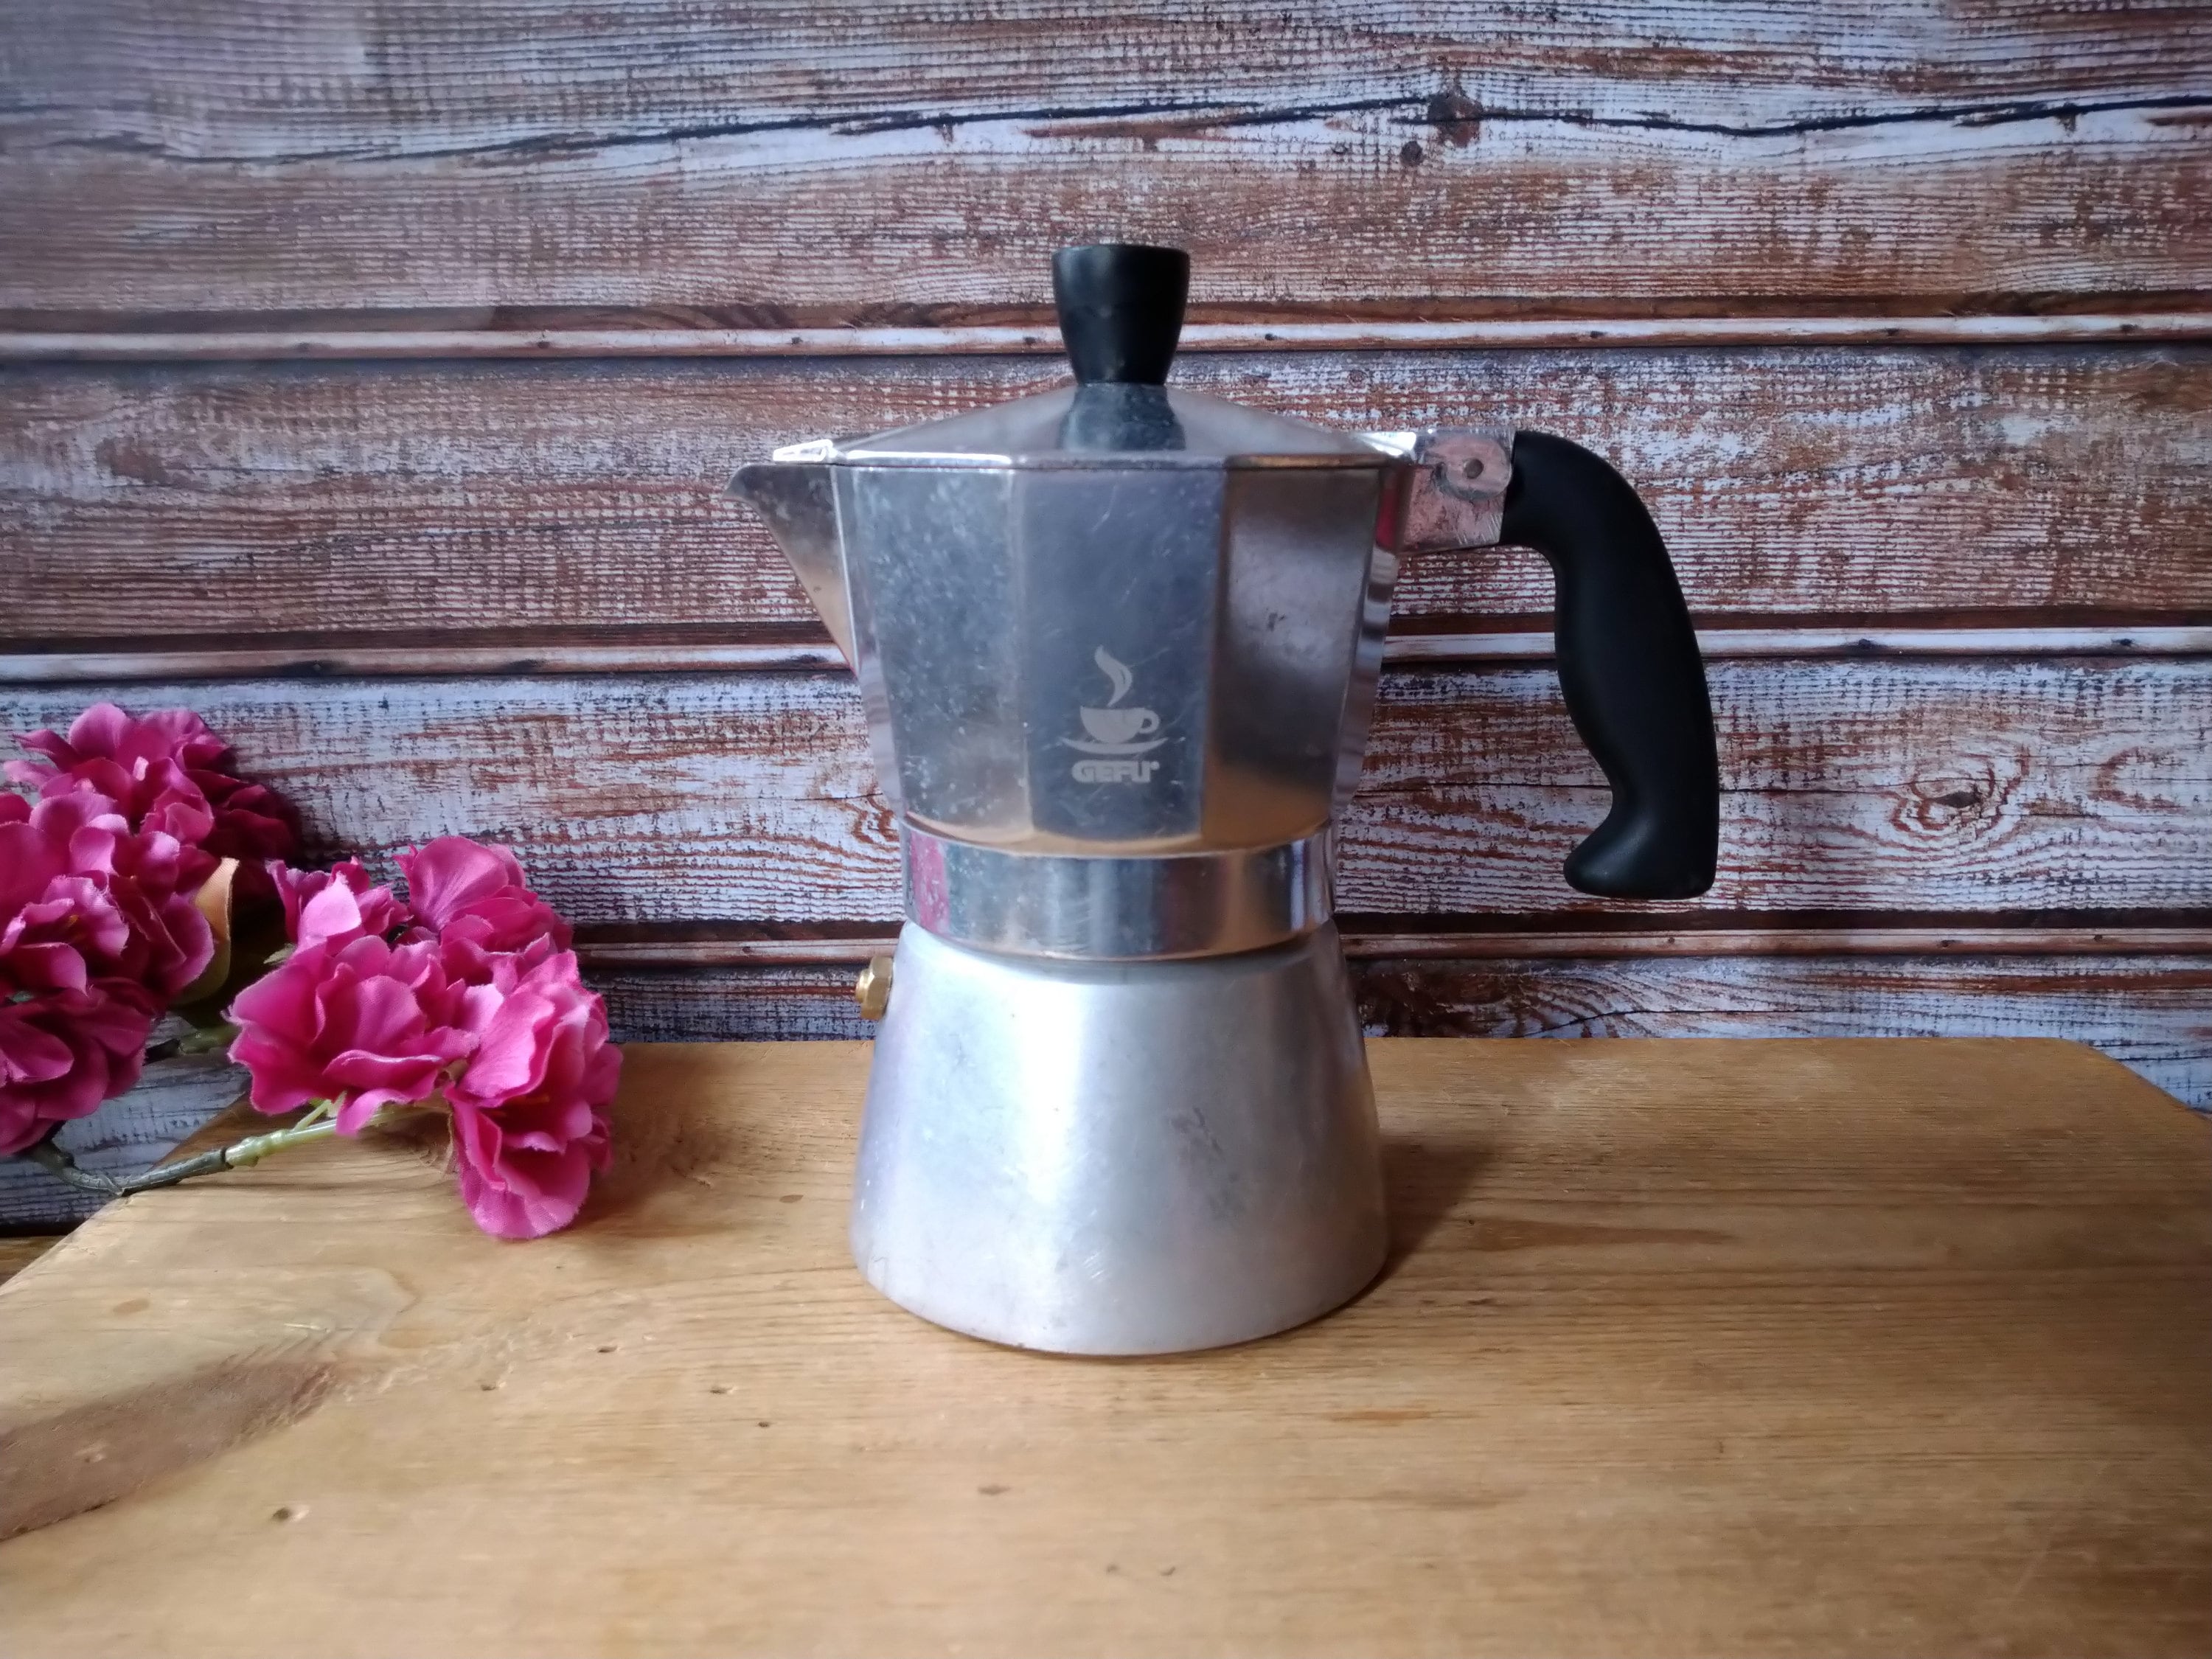 Vintage Stovetop Coffee Maker Gefu, Moka Pot, Metal Coffee Percolator,  Espresso Pot, Stovetop Espresso. 